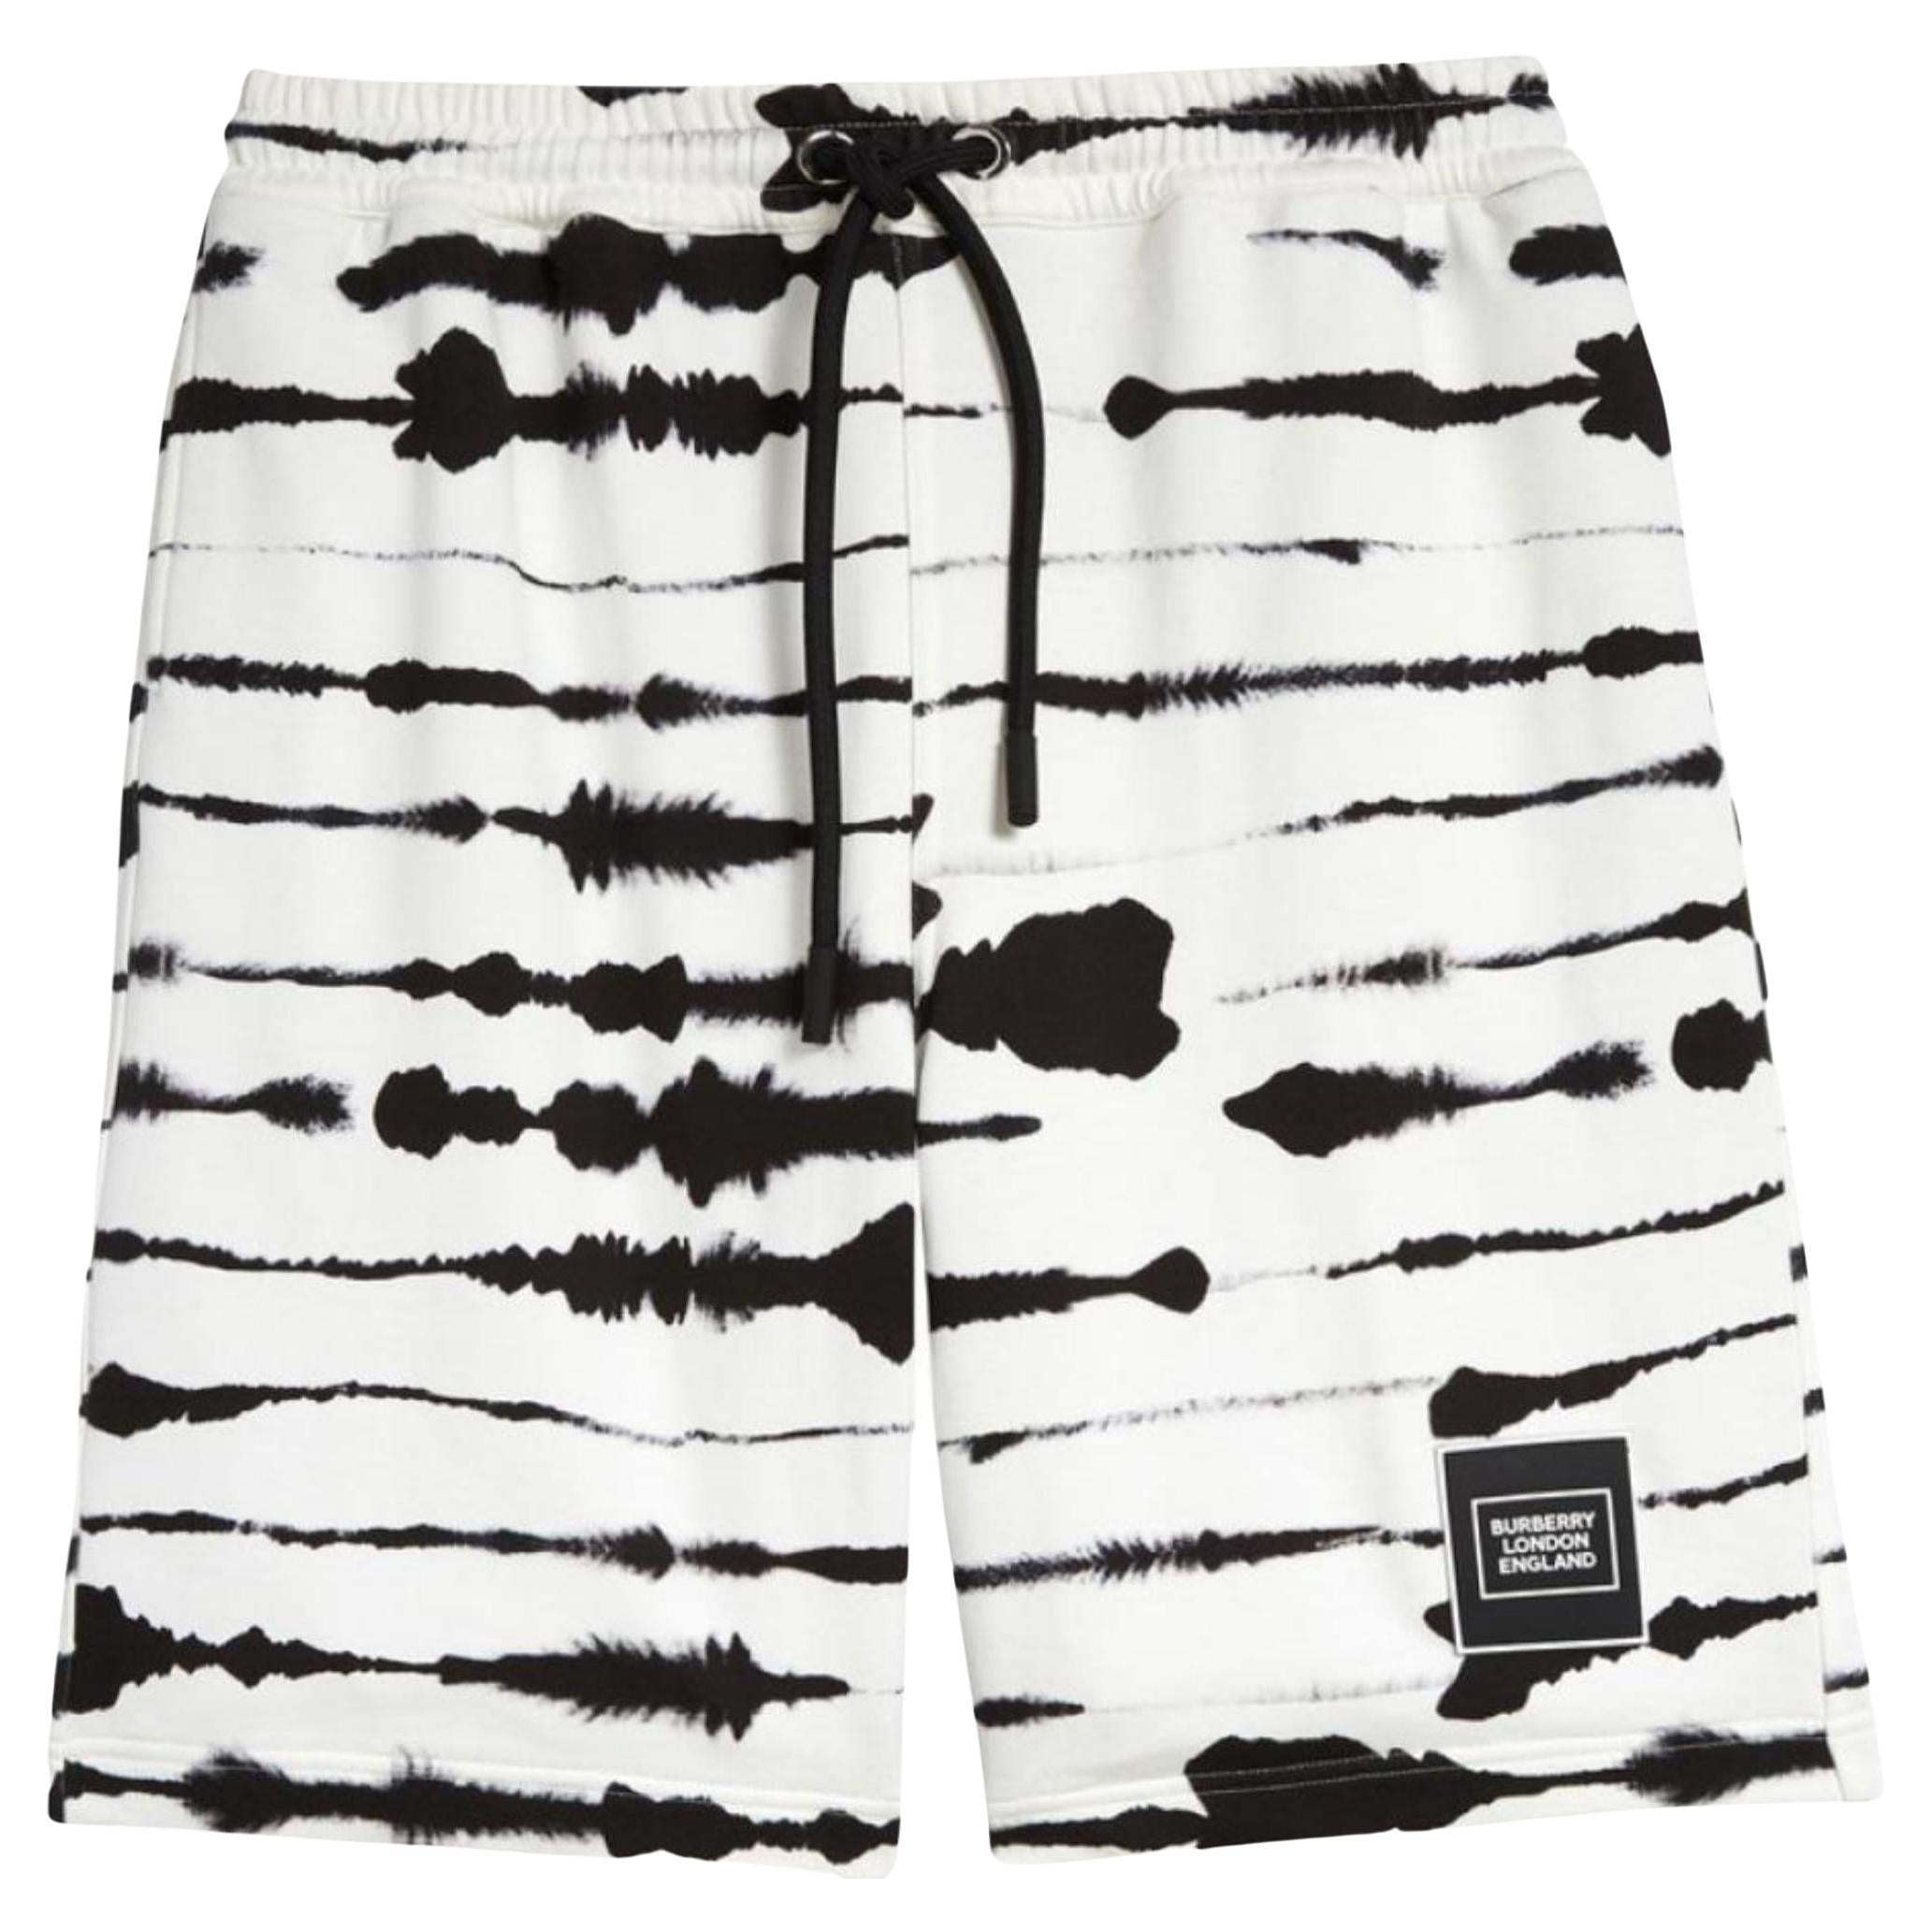 Burberry Men's Small Alberto Zebra Cotton Sweat Shorts 119b64